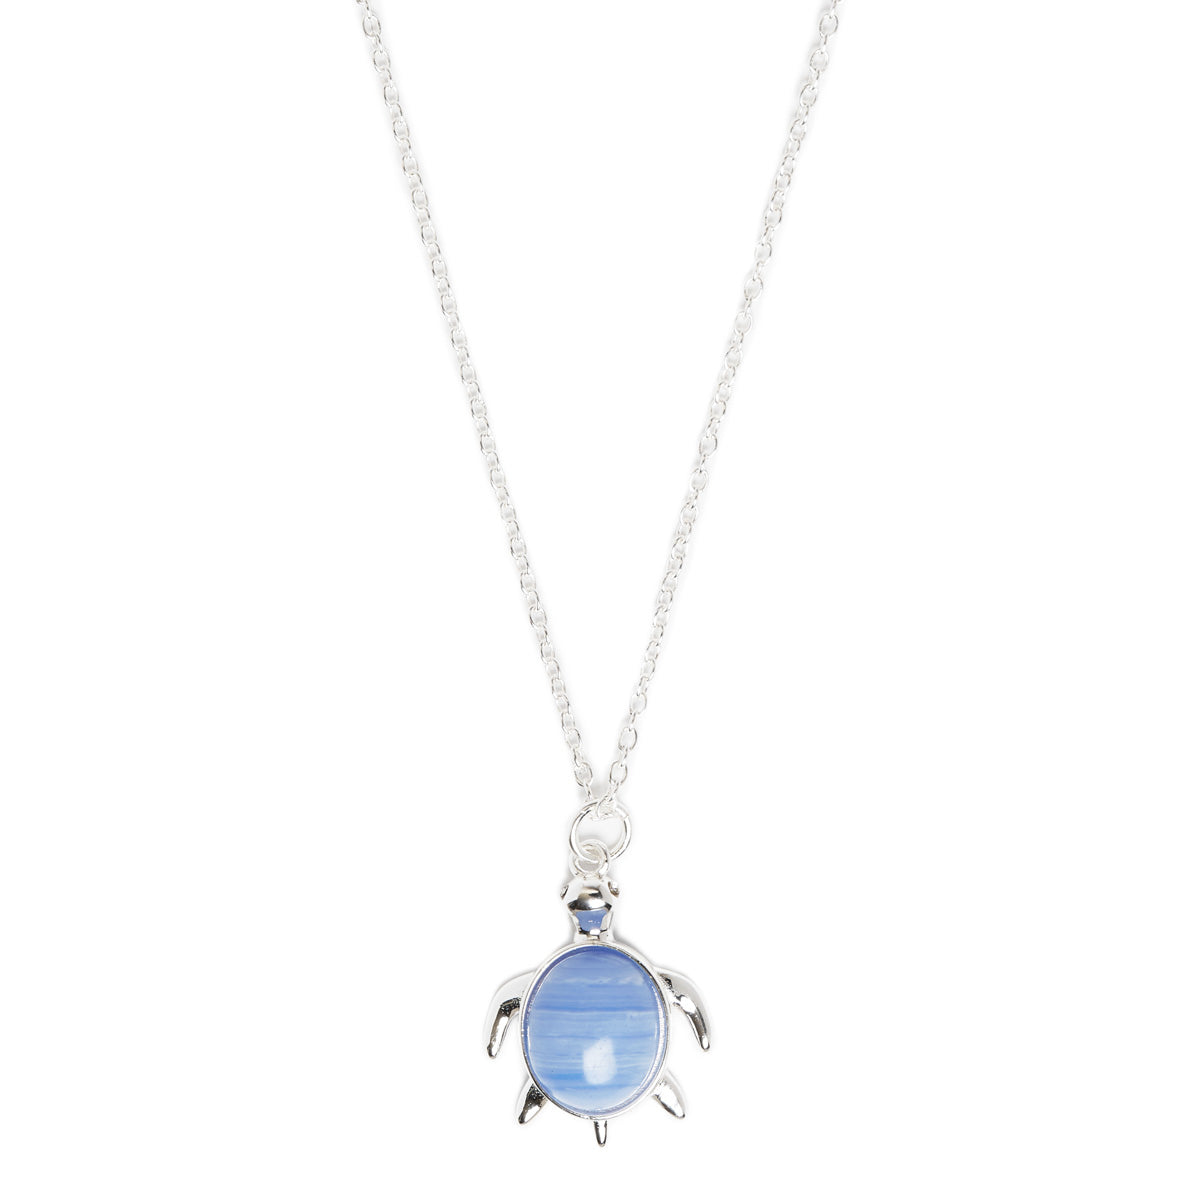 Turtle Necklace Blue Lace Agate